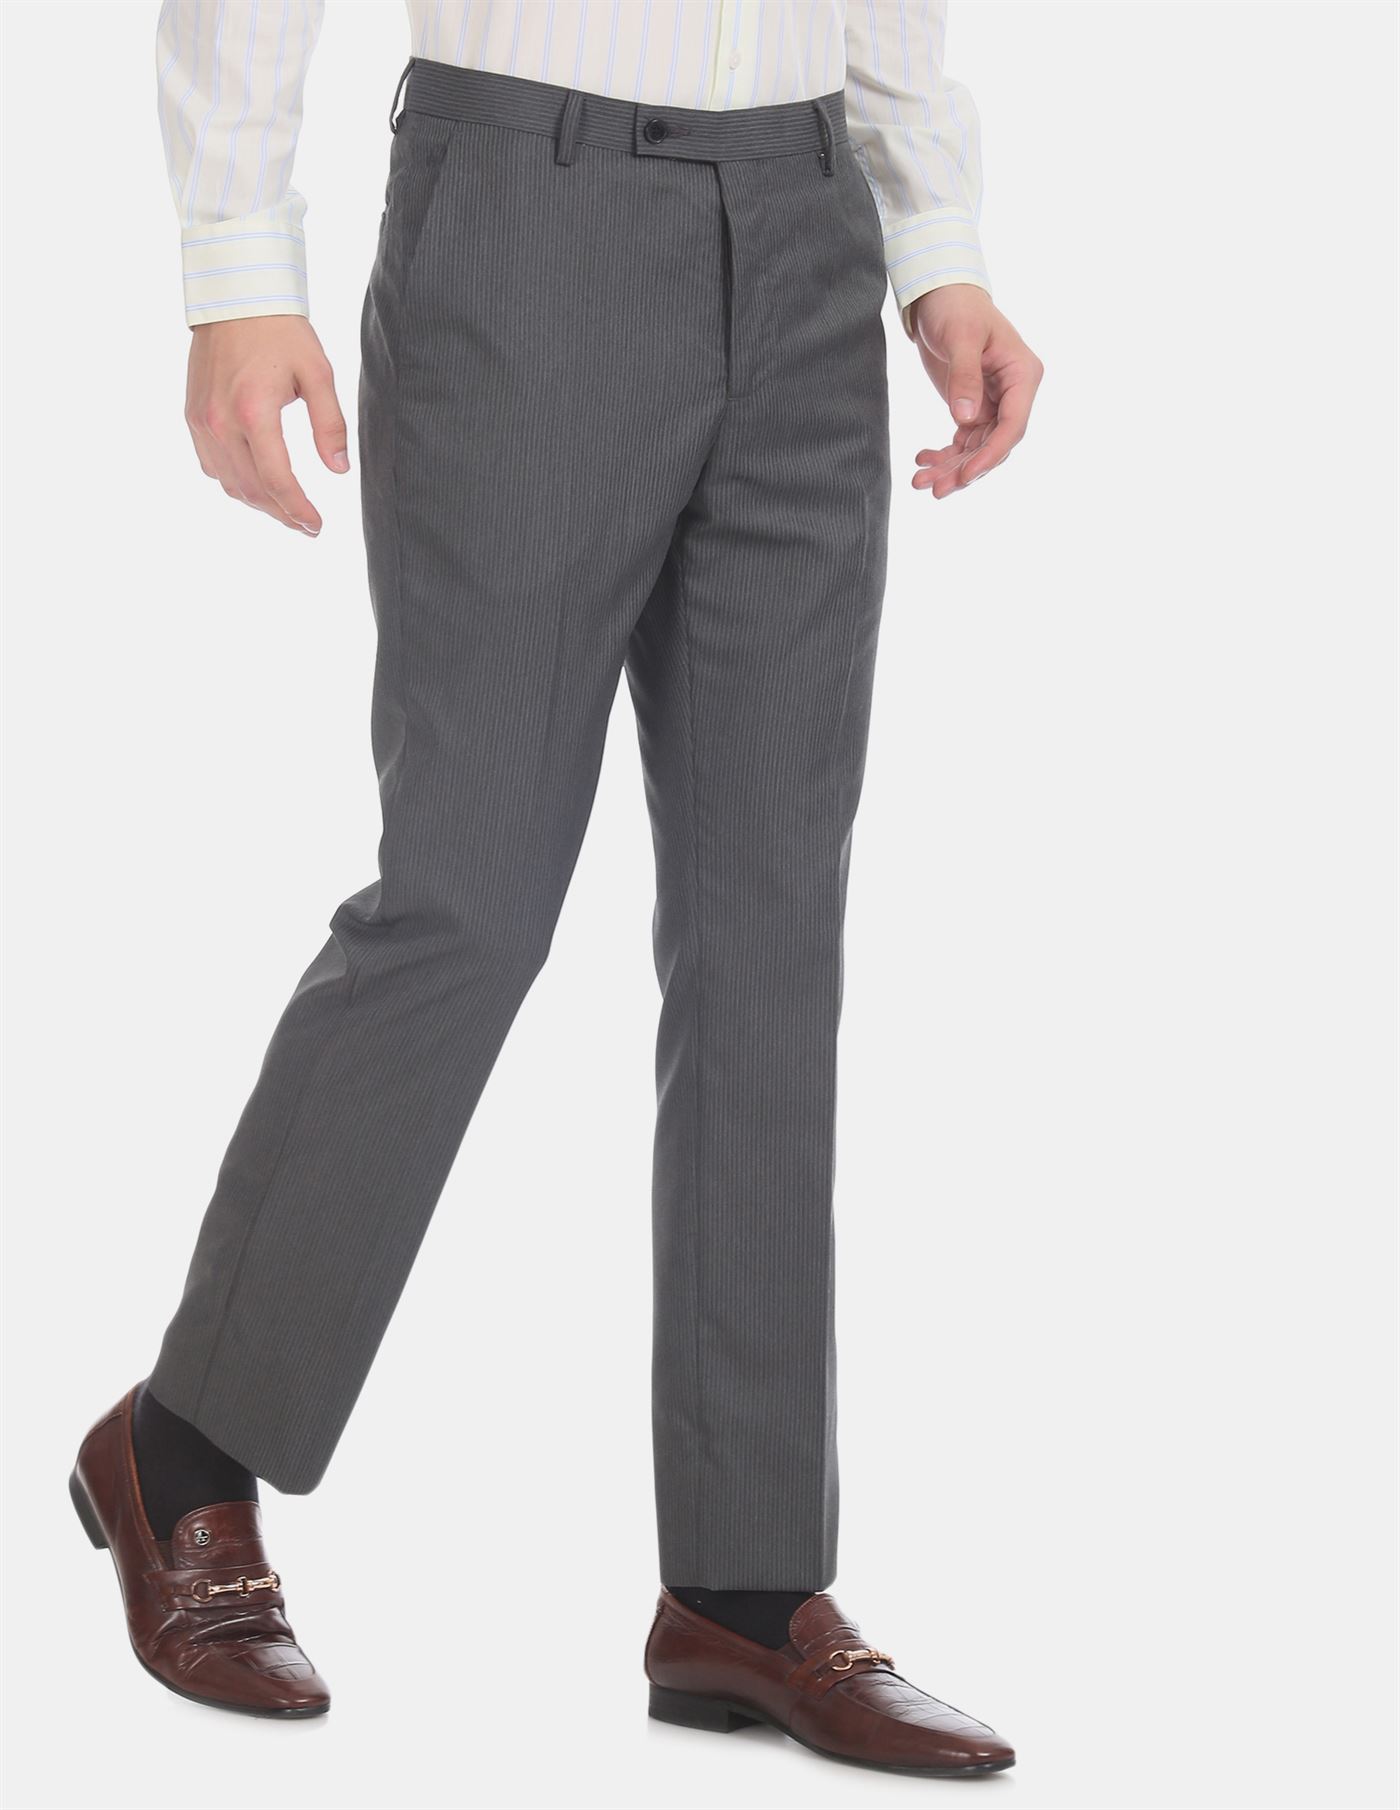 Buy Arrow Medium Grey Checkered Formal Trouser ARADTR213530 at Amazonin